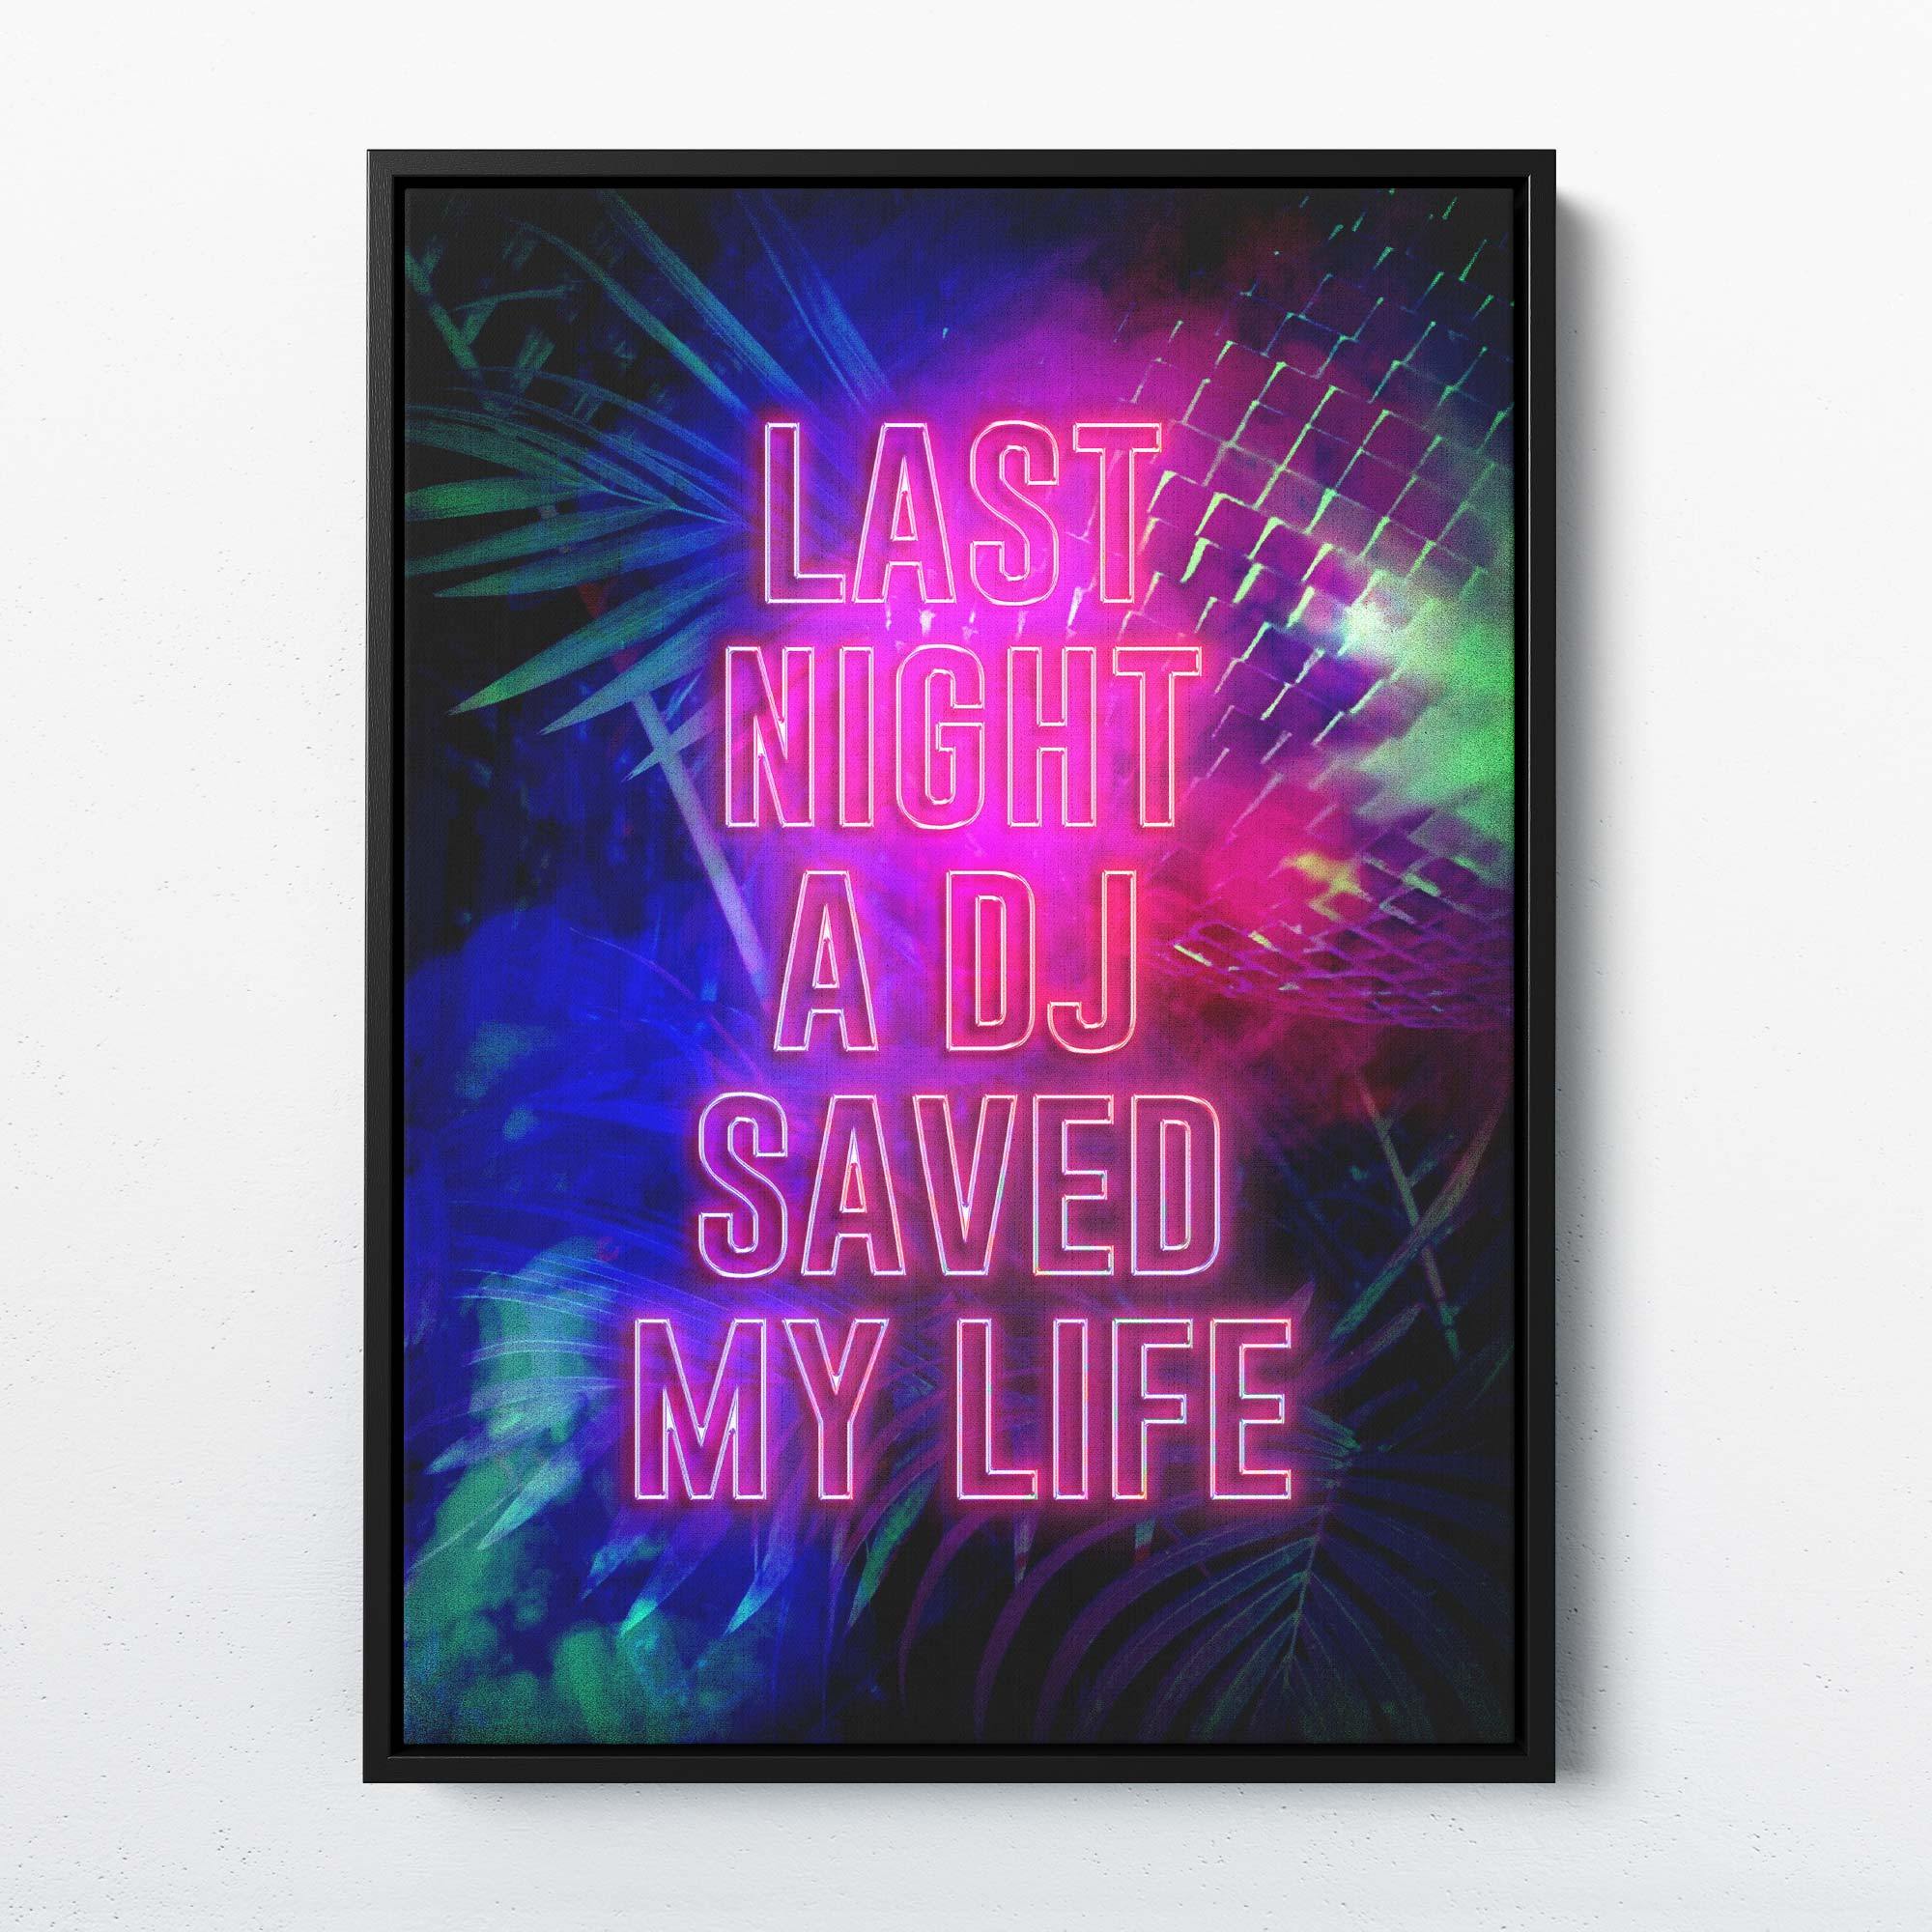 LAST NIGHT A DJ SAVED MY LIFE framed art print